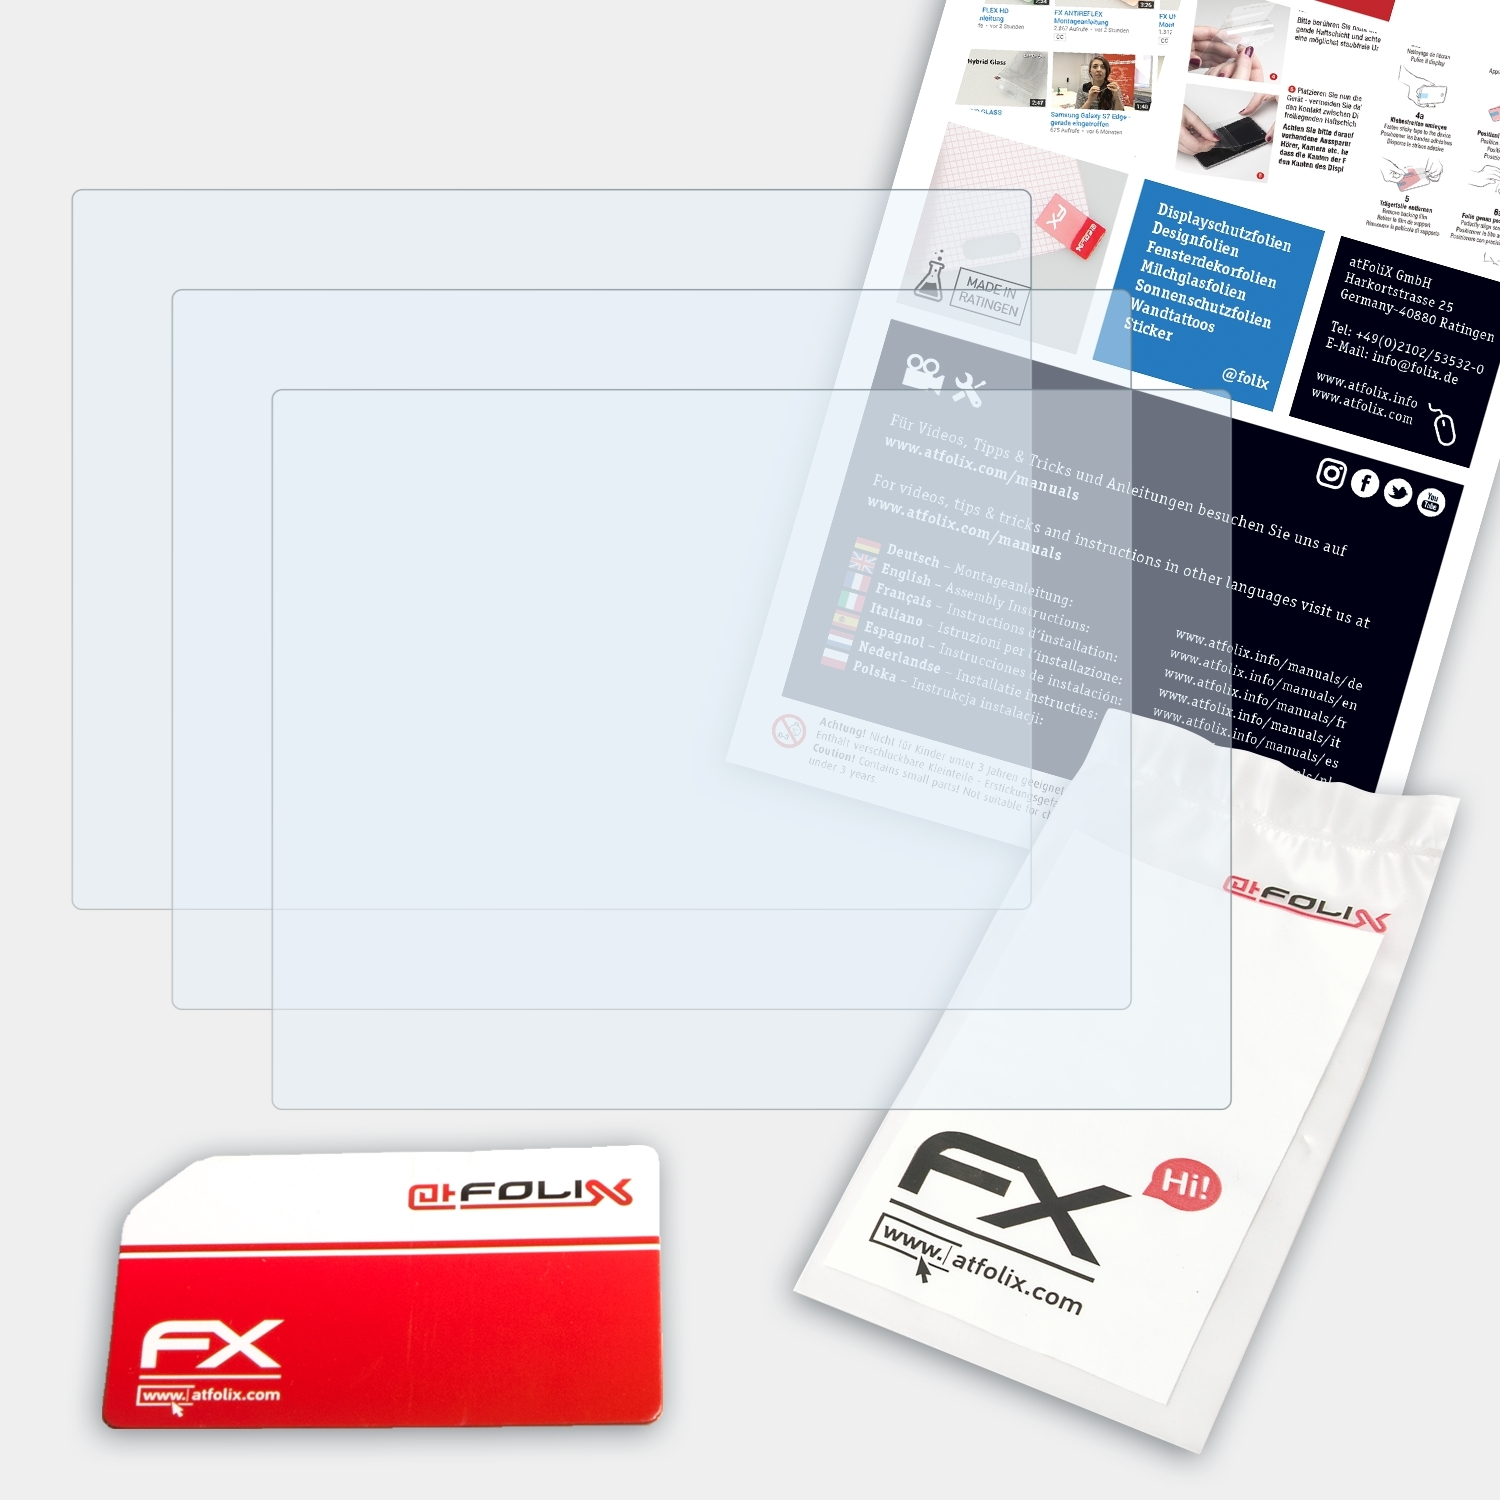 X-E1) ATFOLIX FX-Clear 3x Displayschutz(für Fujifilm